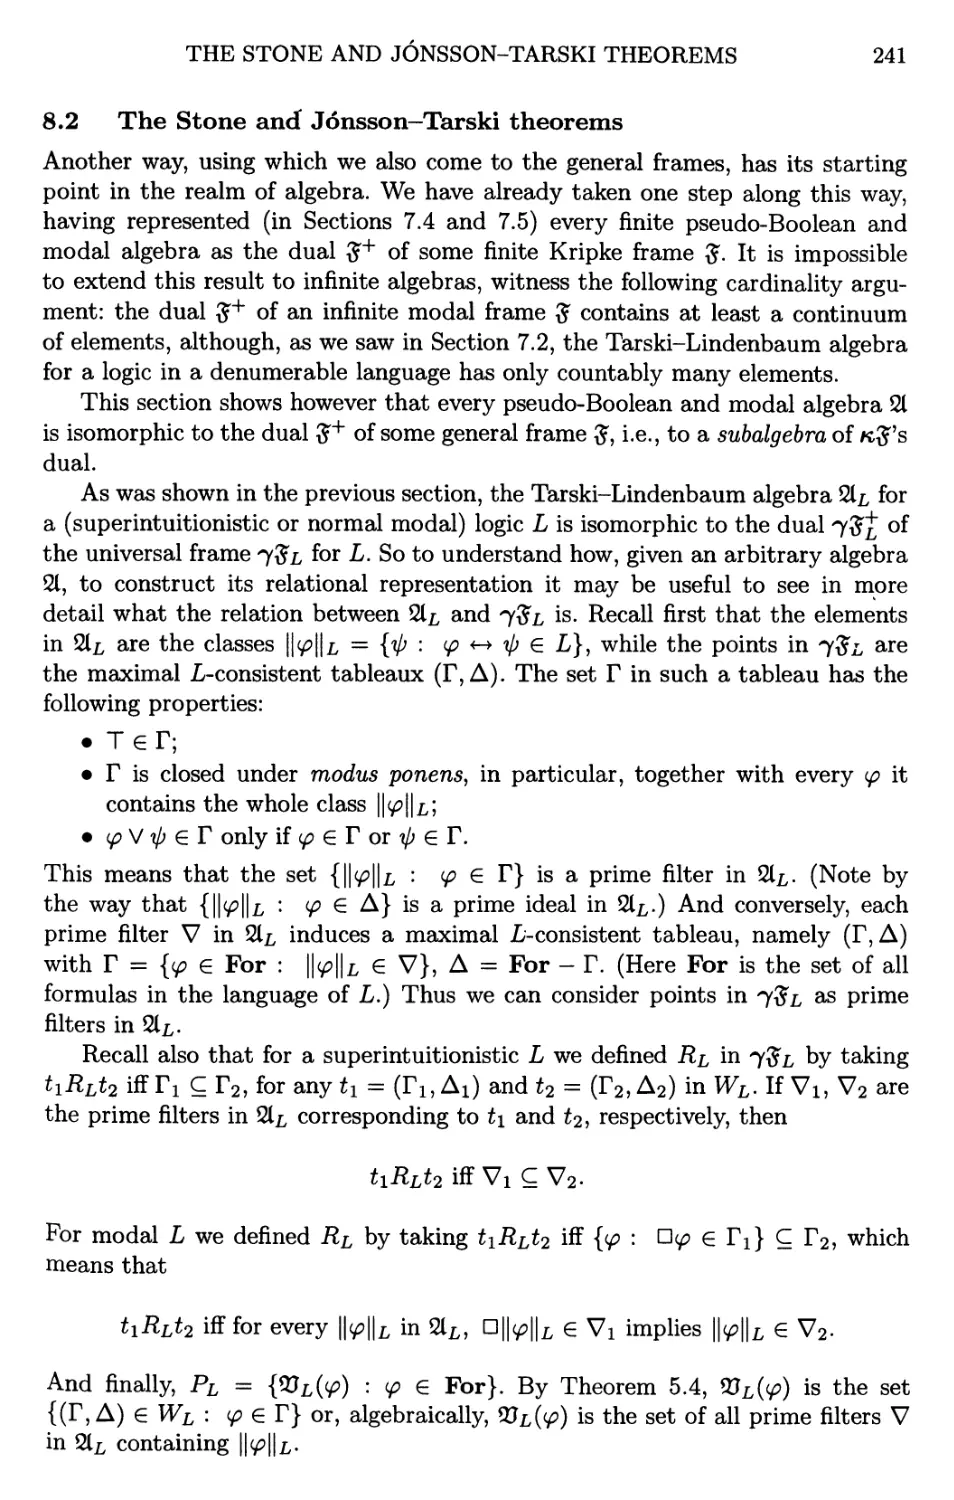 8.2 The Stone and Jonsson-Tarski theorems